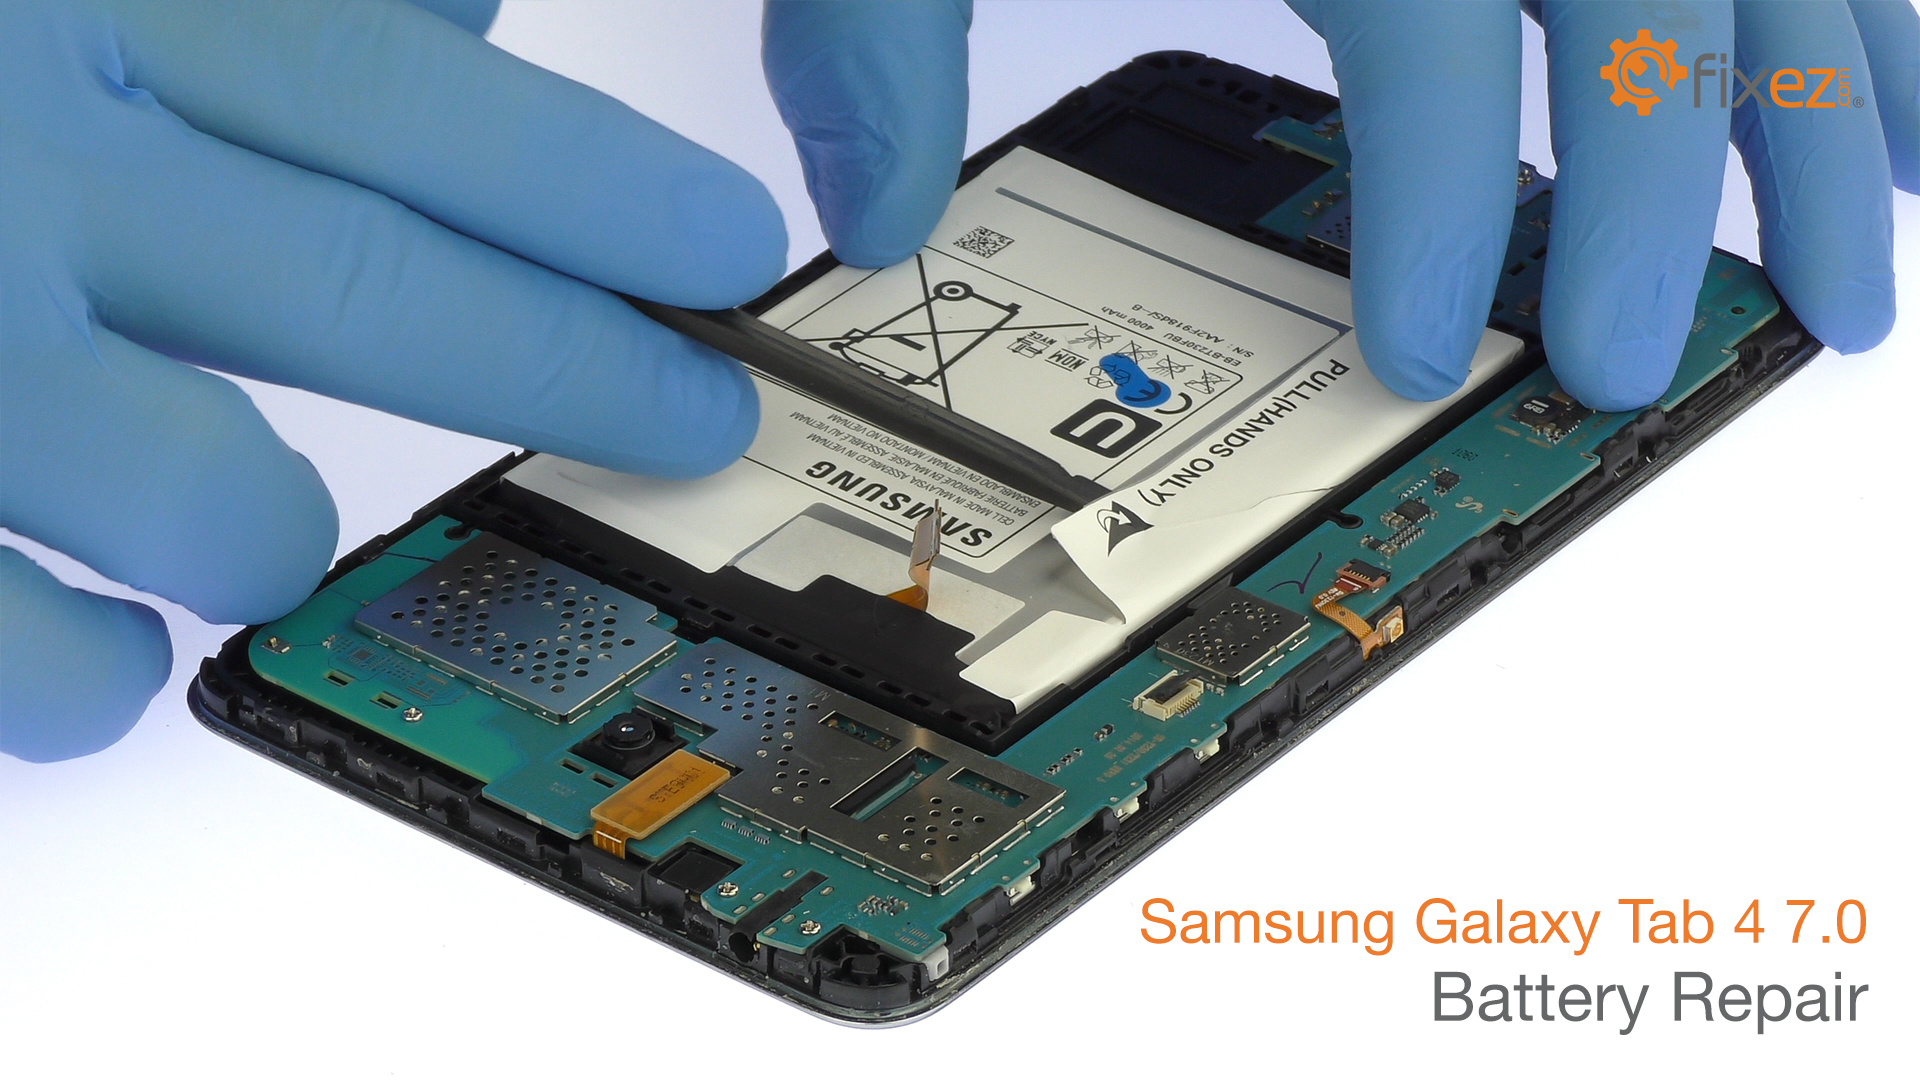 Samsung Galaxy Tab 4 7.0 Battery Repair